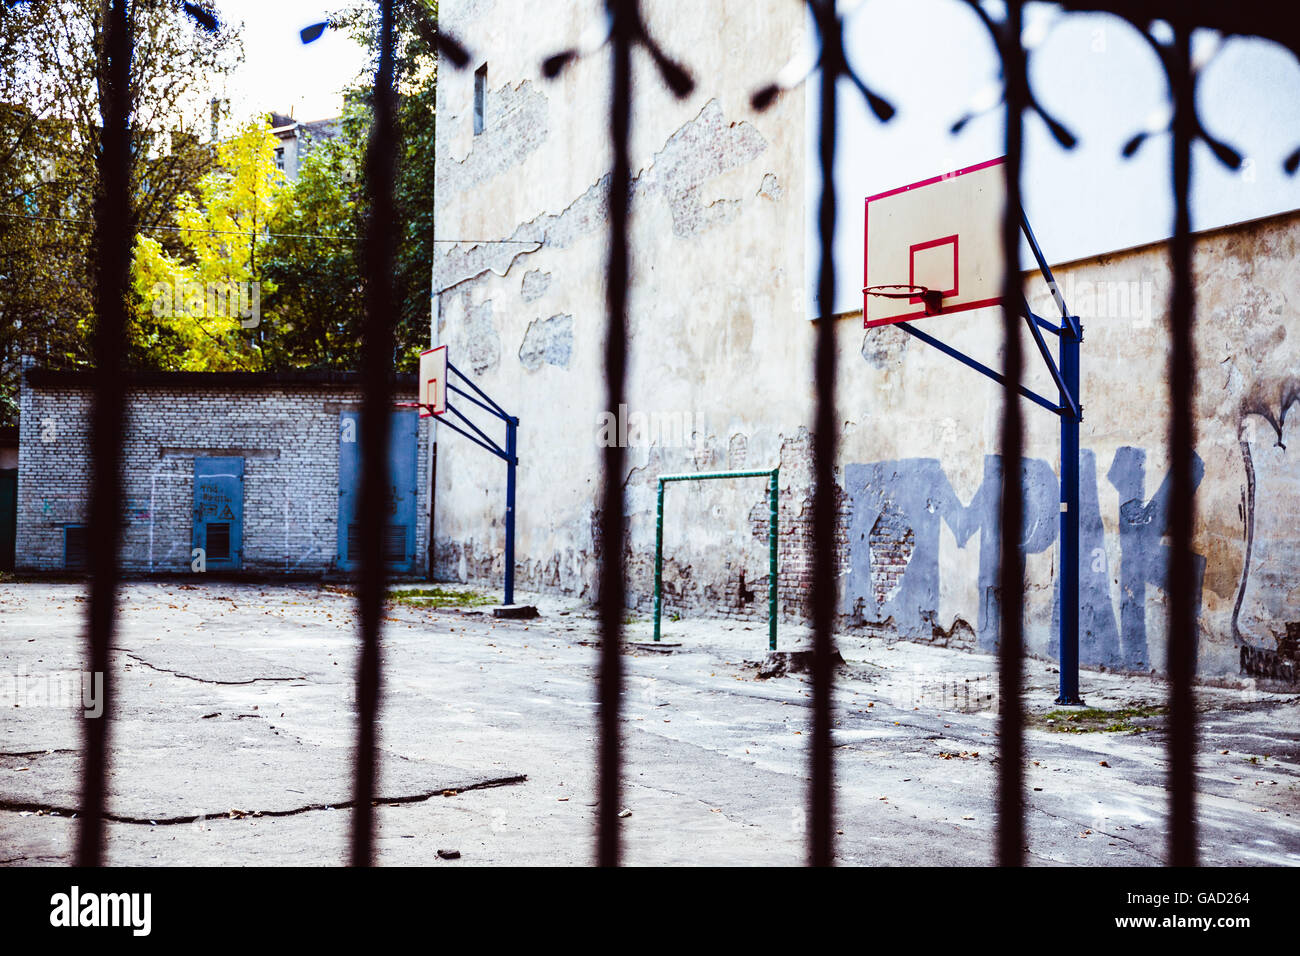 Backyard Basketball abandonnés Banque D'Images